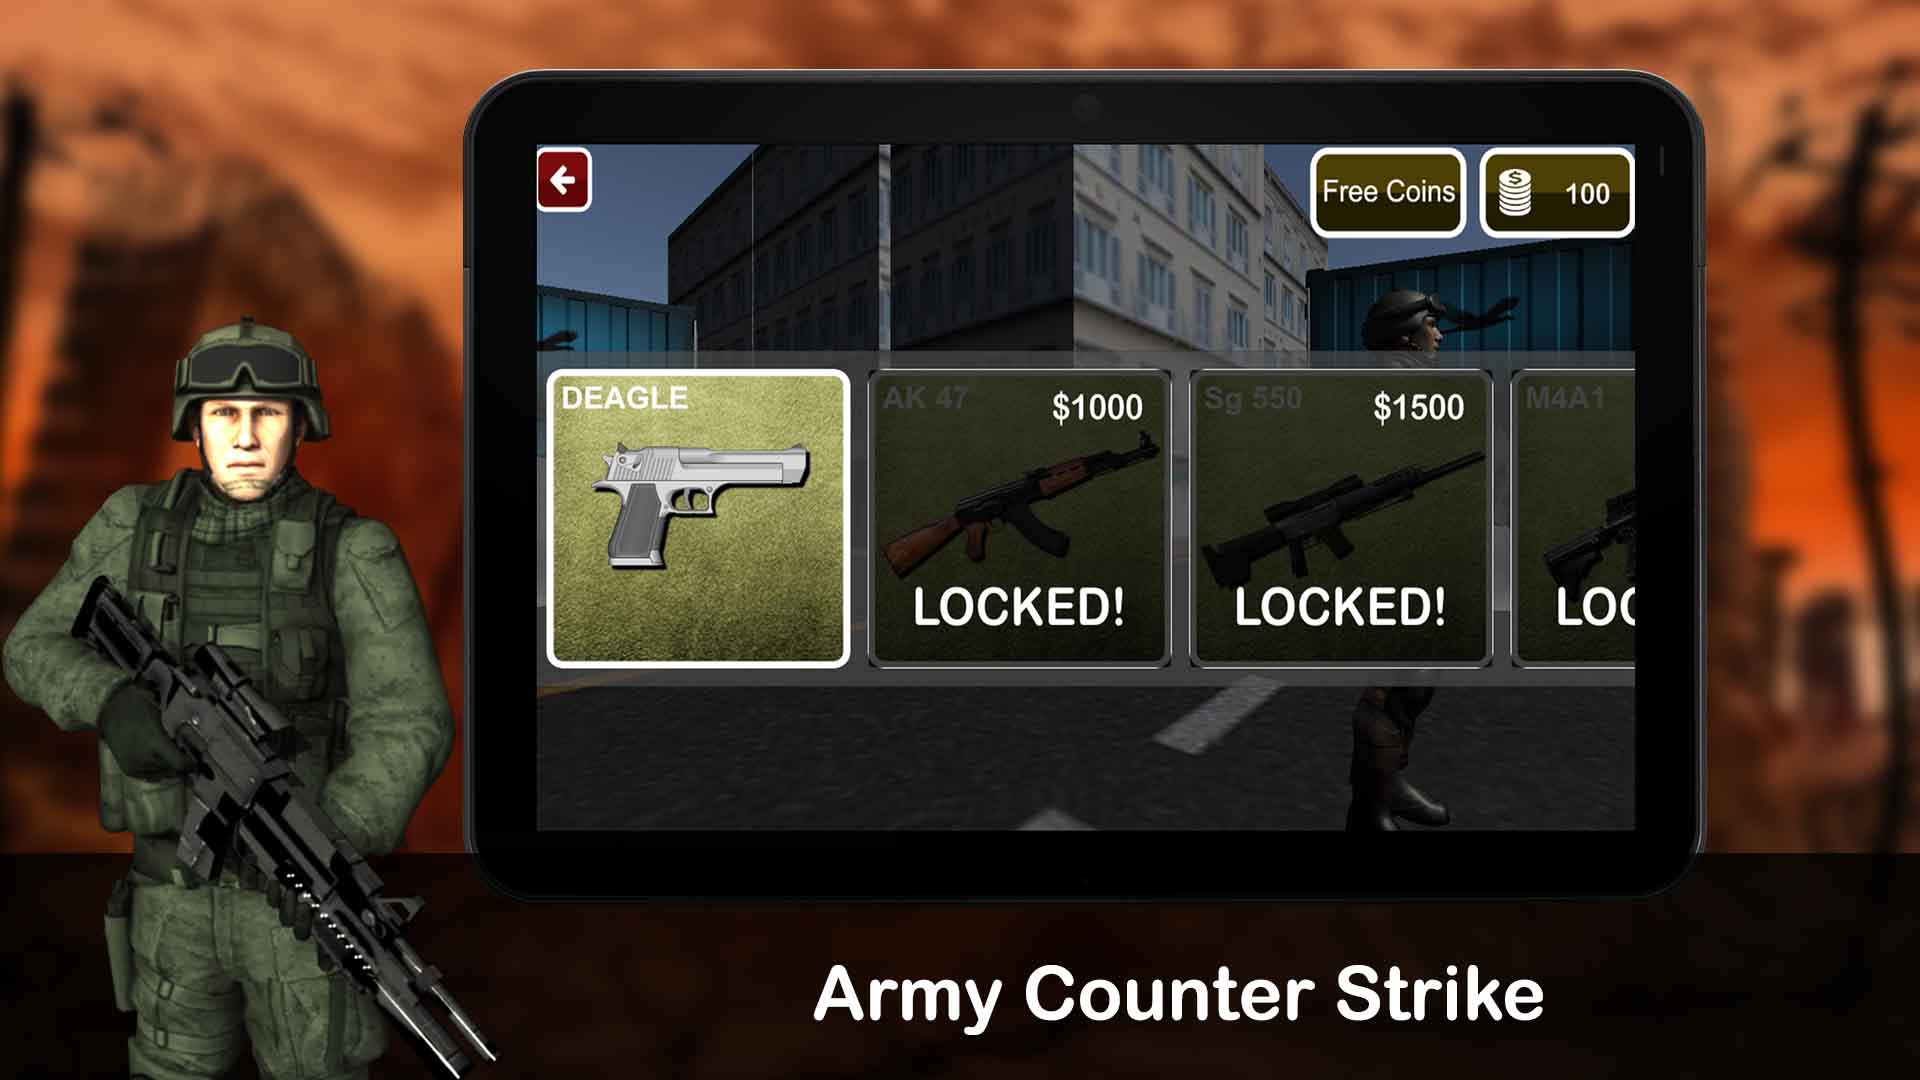 Counter Strike Sniper Shooting